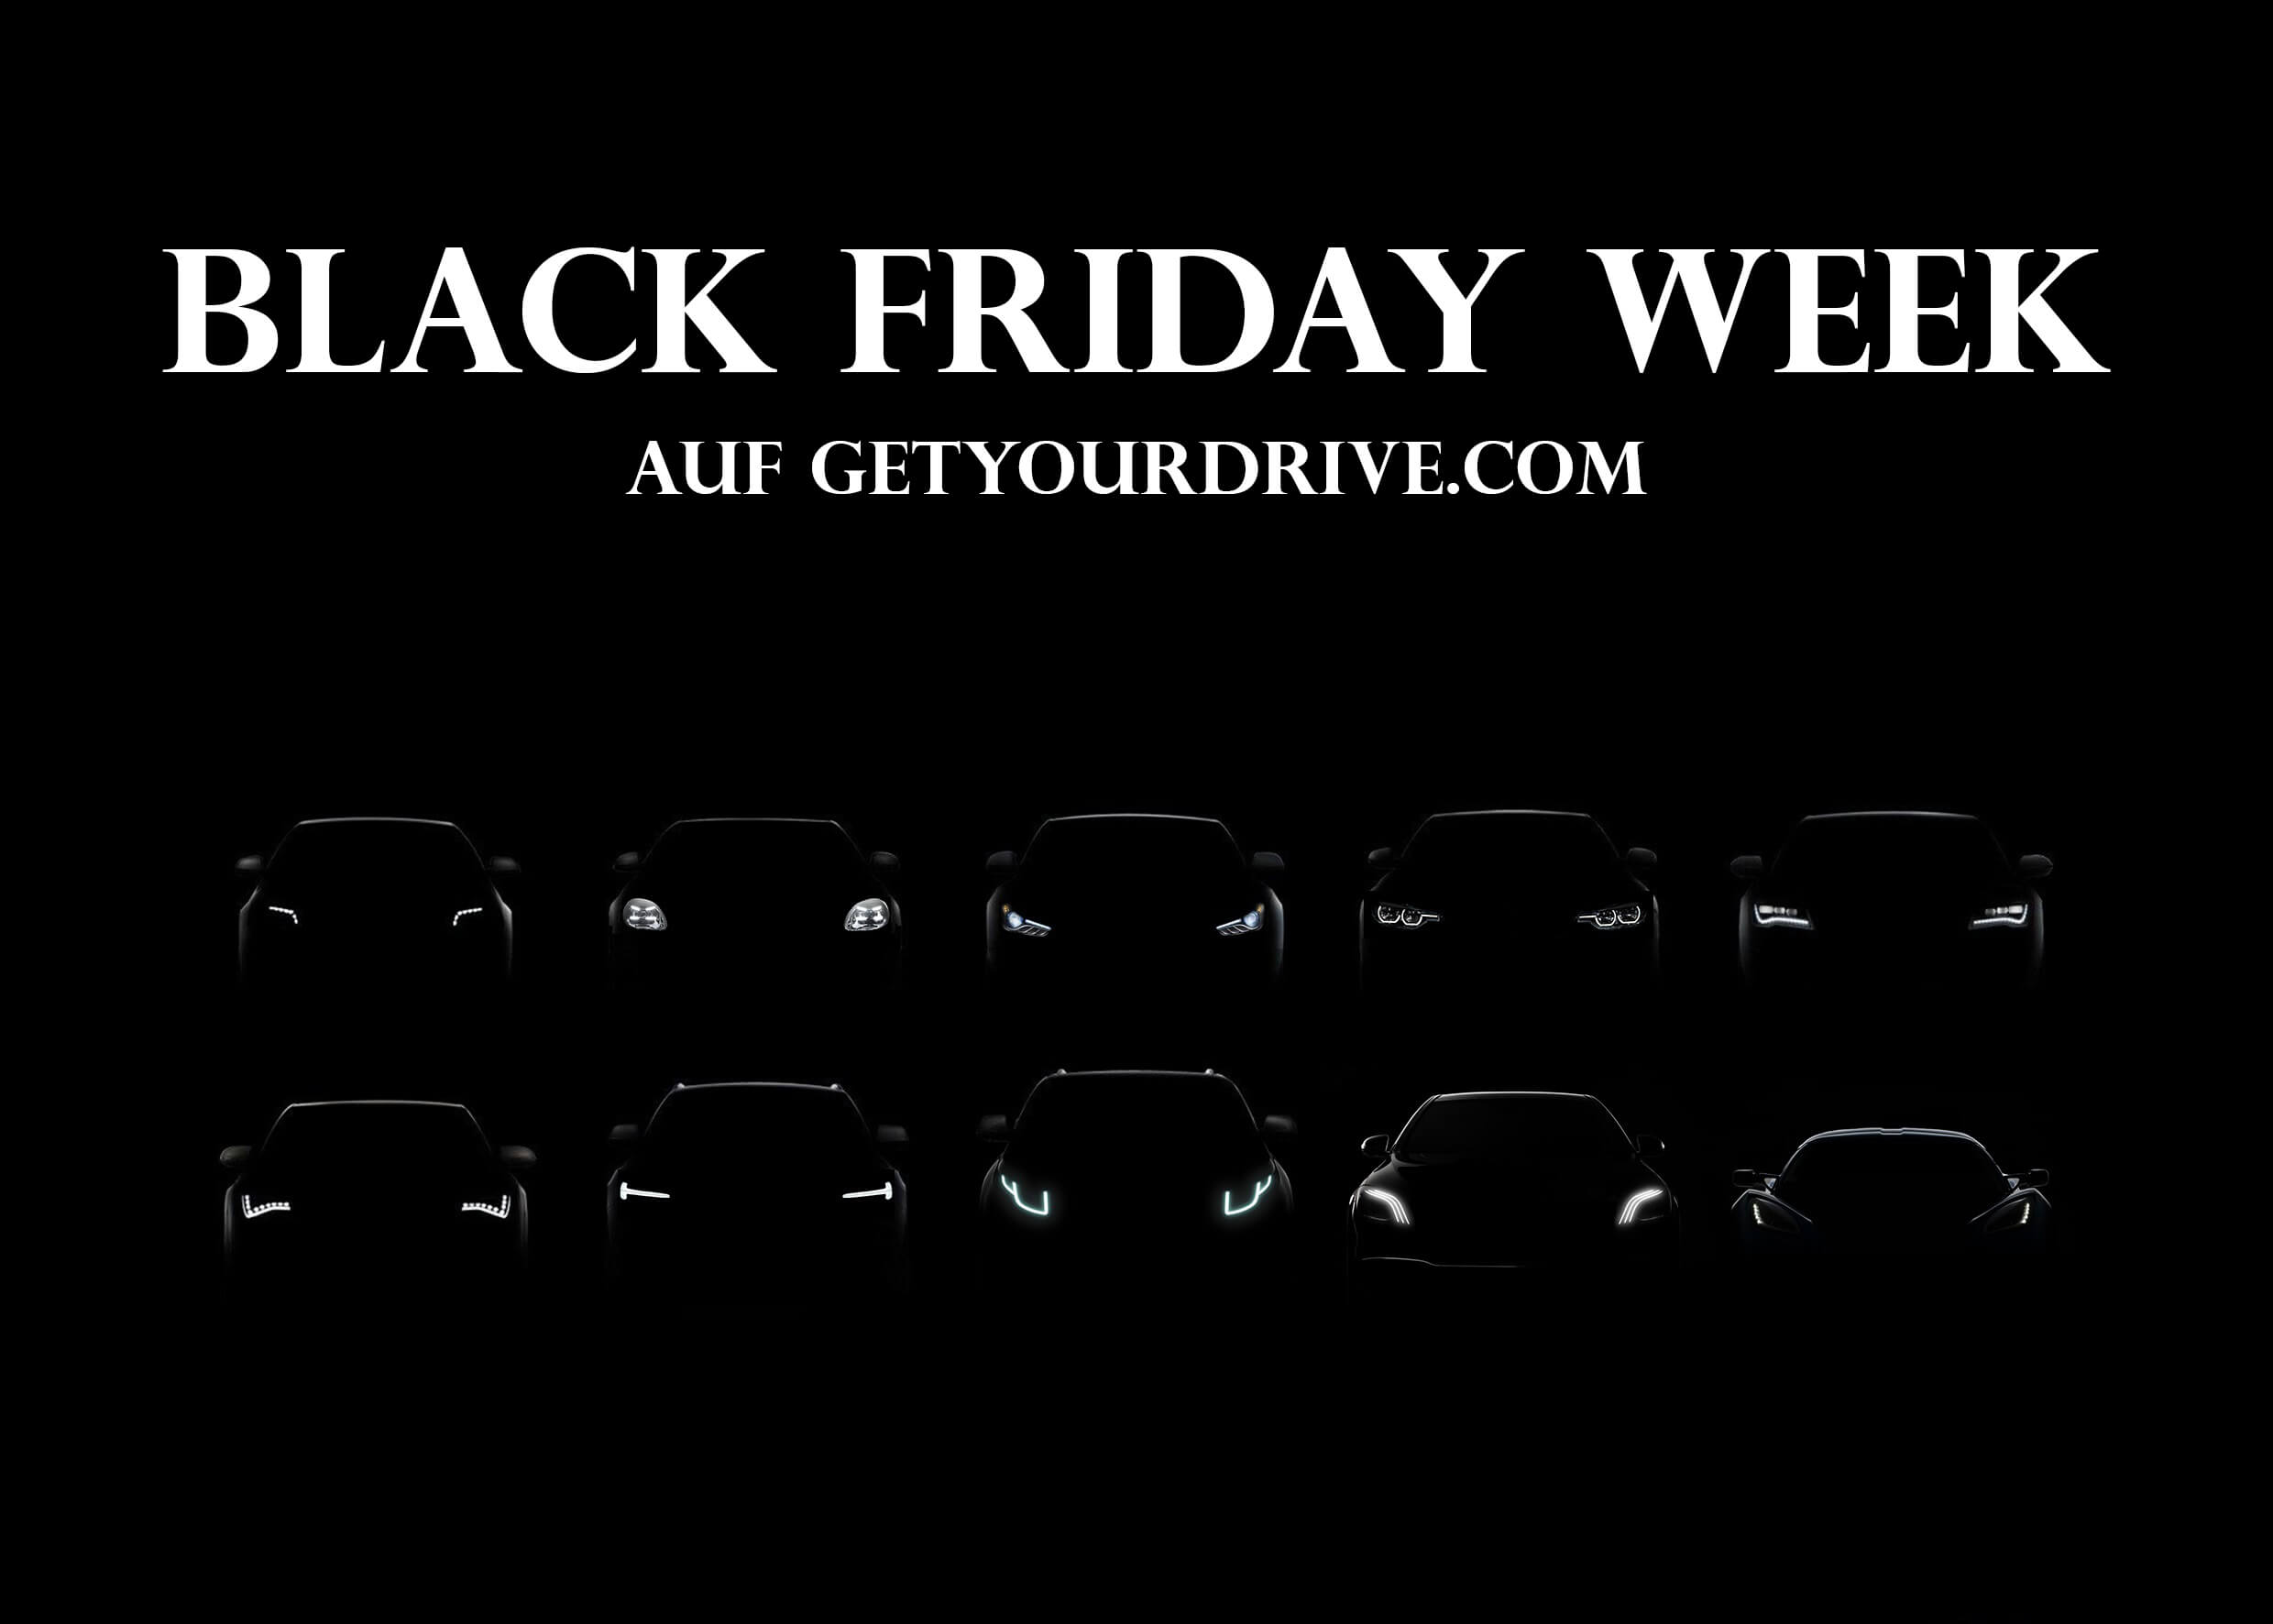 BlackFriday-Week bei GetYourDrive mit dem Audi A4 Avant